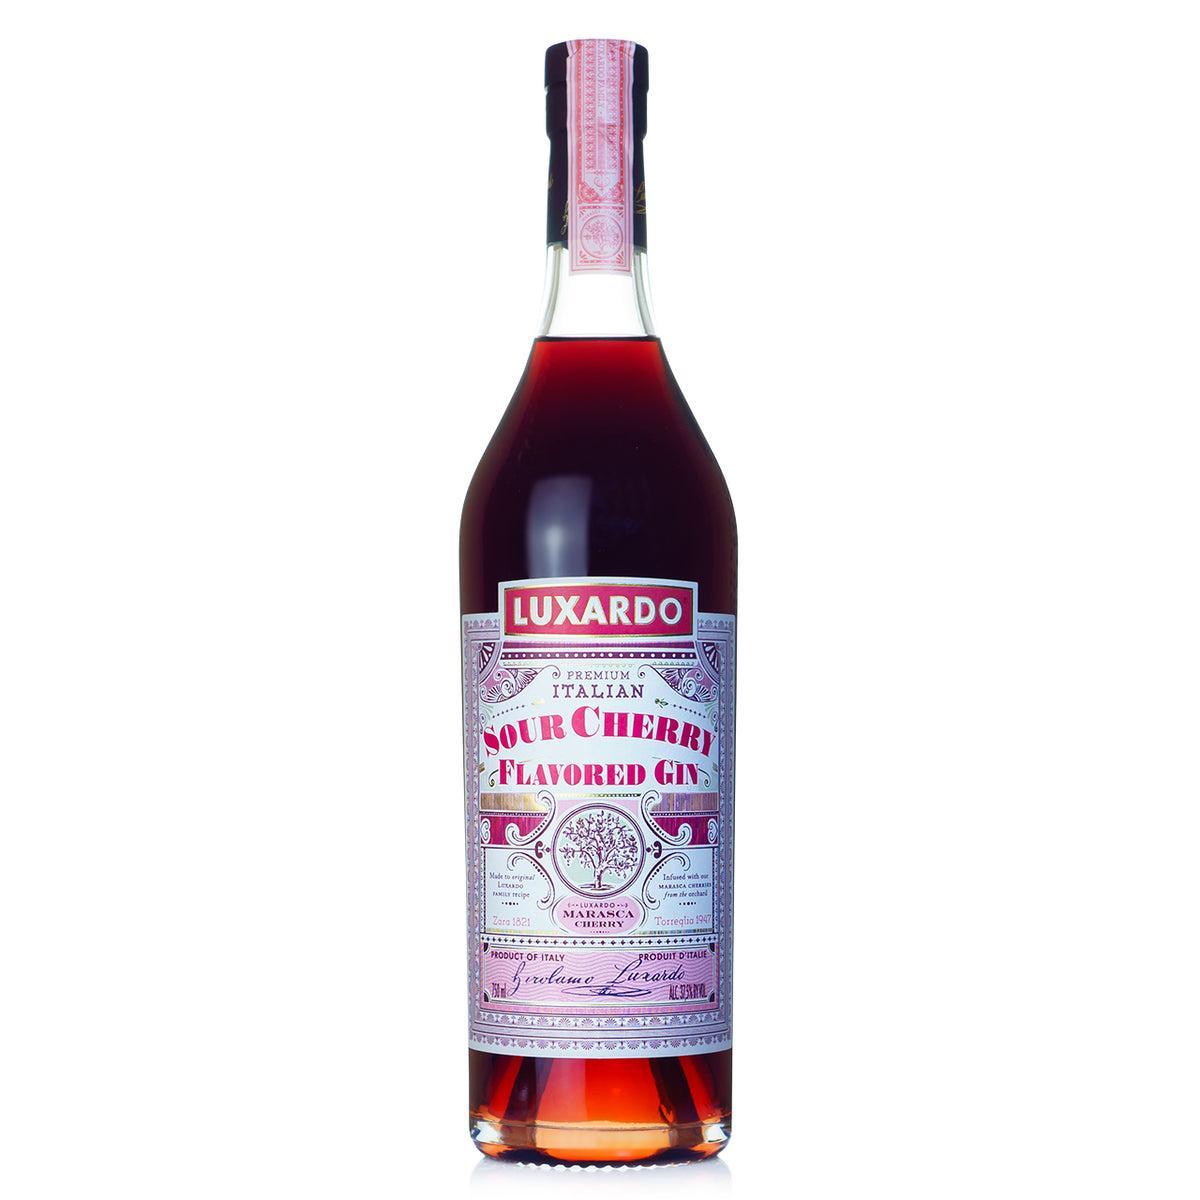 Luxardo - 'Sour Cherry' Flavored Gin (750ML)